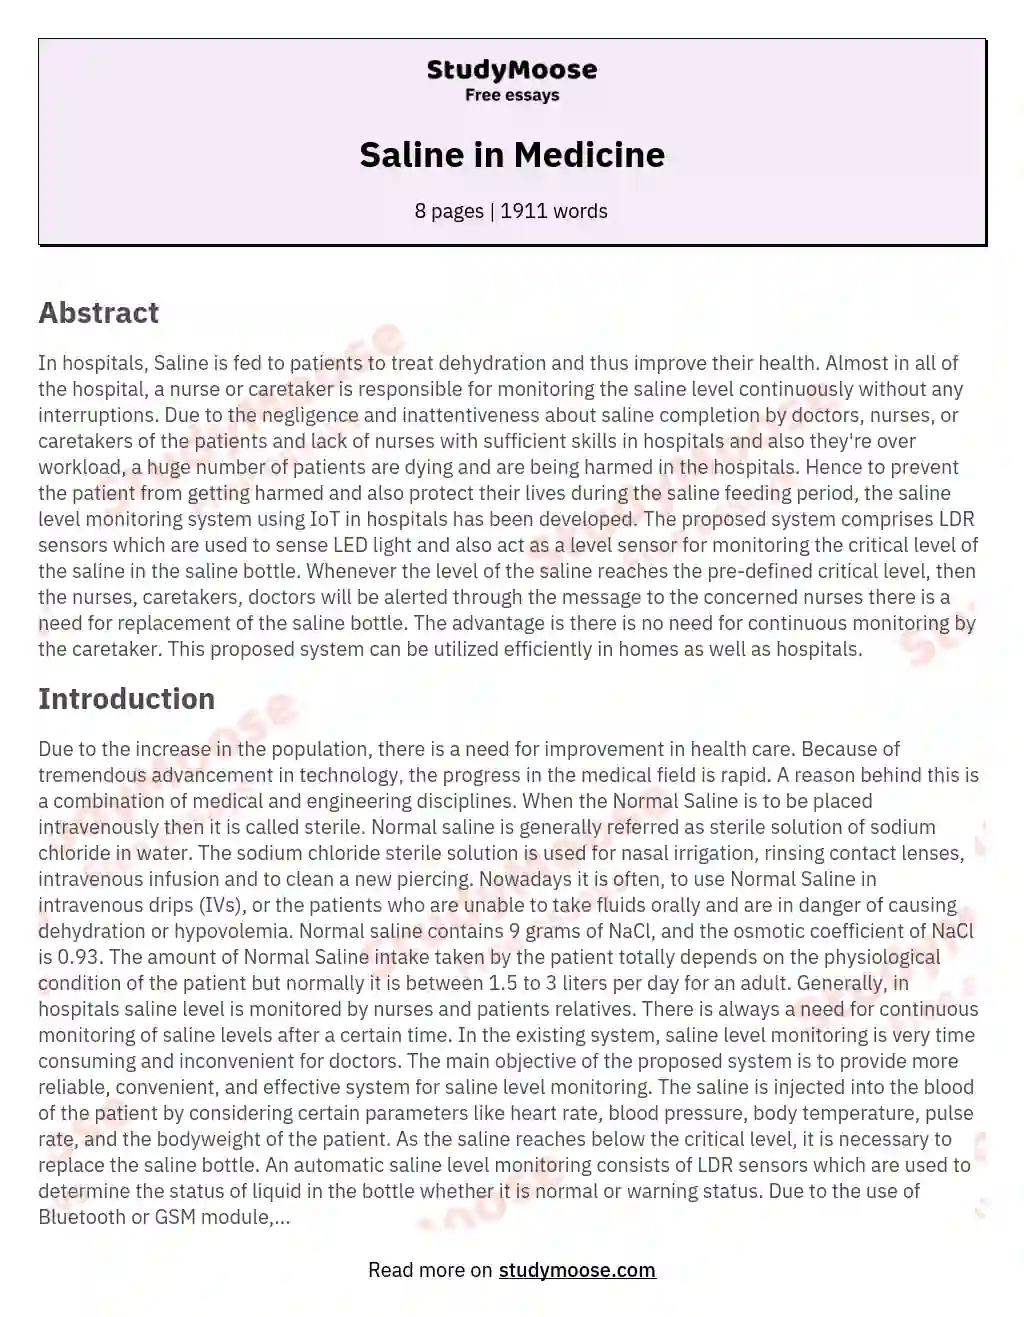 Saline in Medicine essay